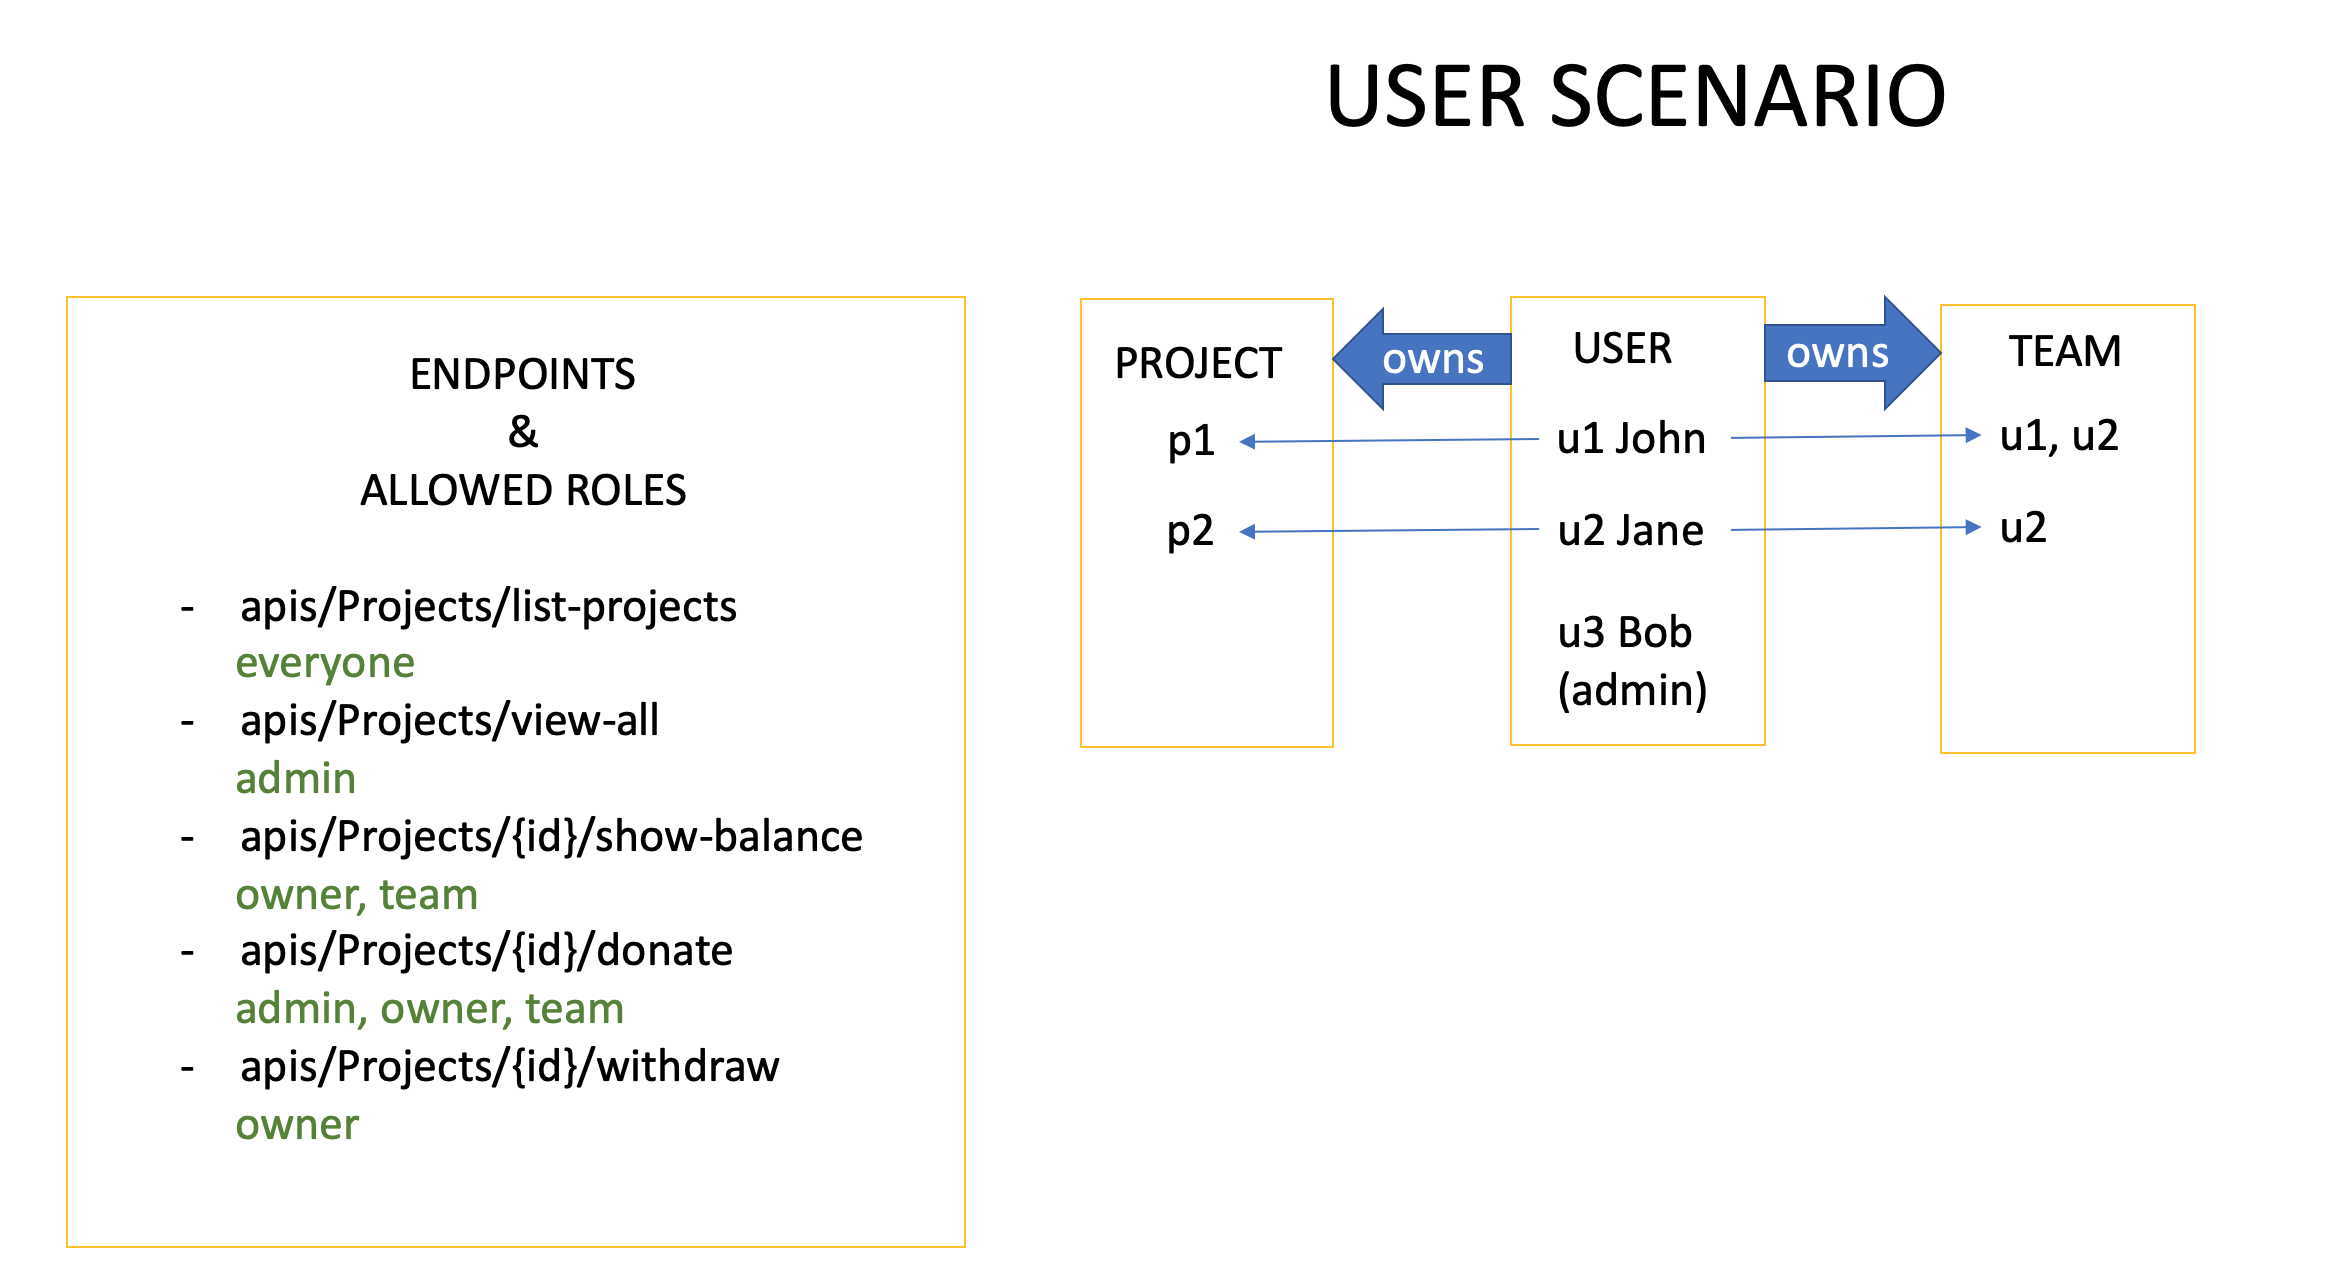 User scenario